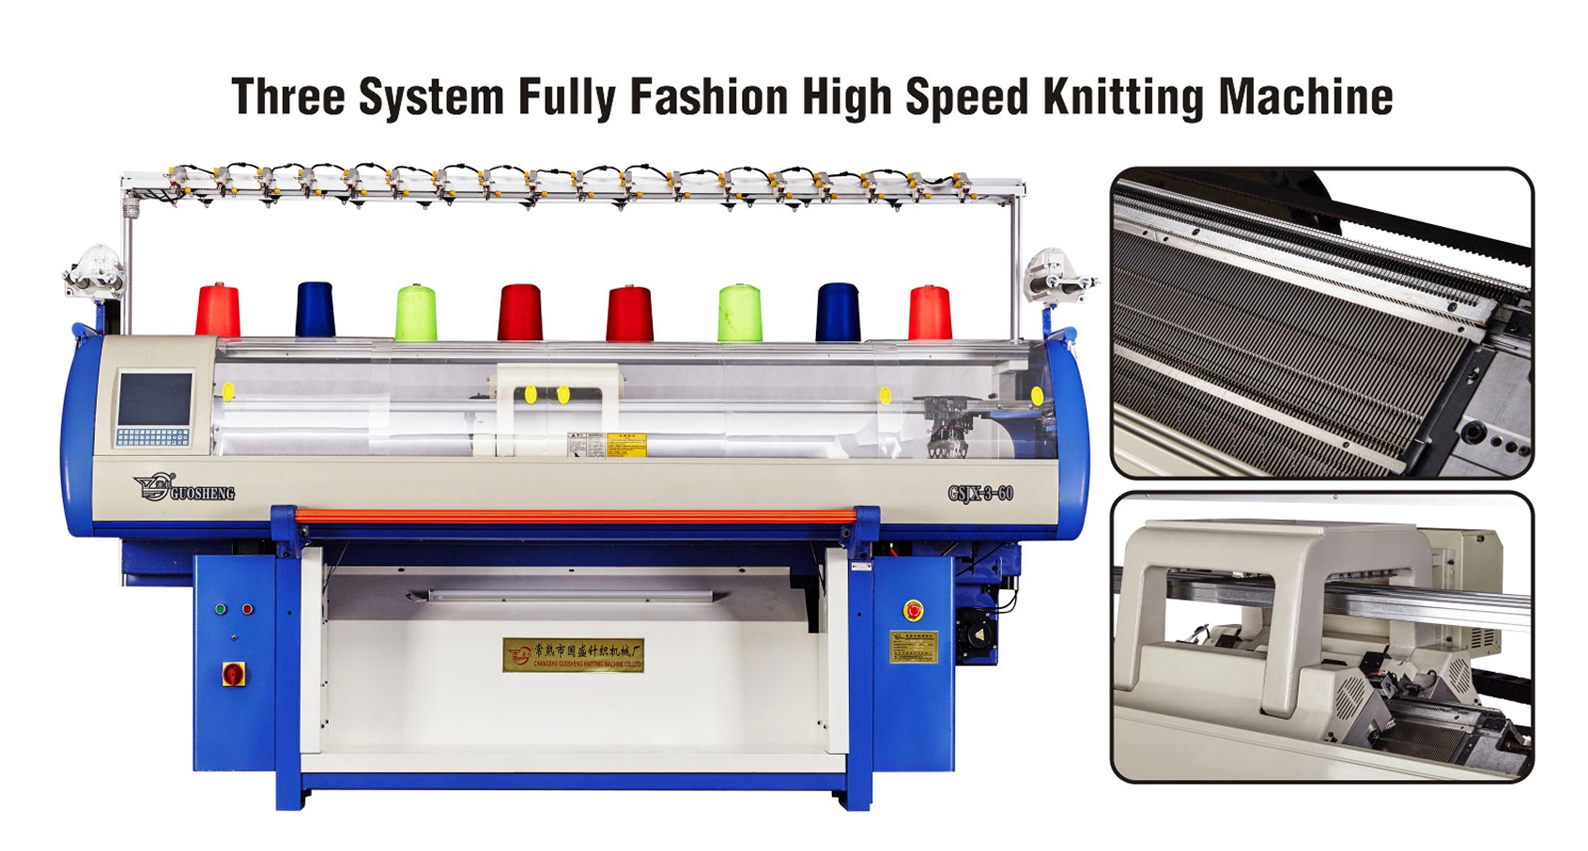 Three System Fully Fashion High Speed Knitting Machine